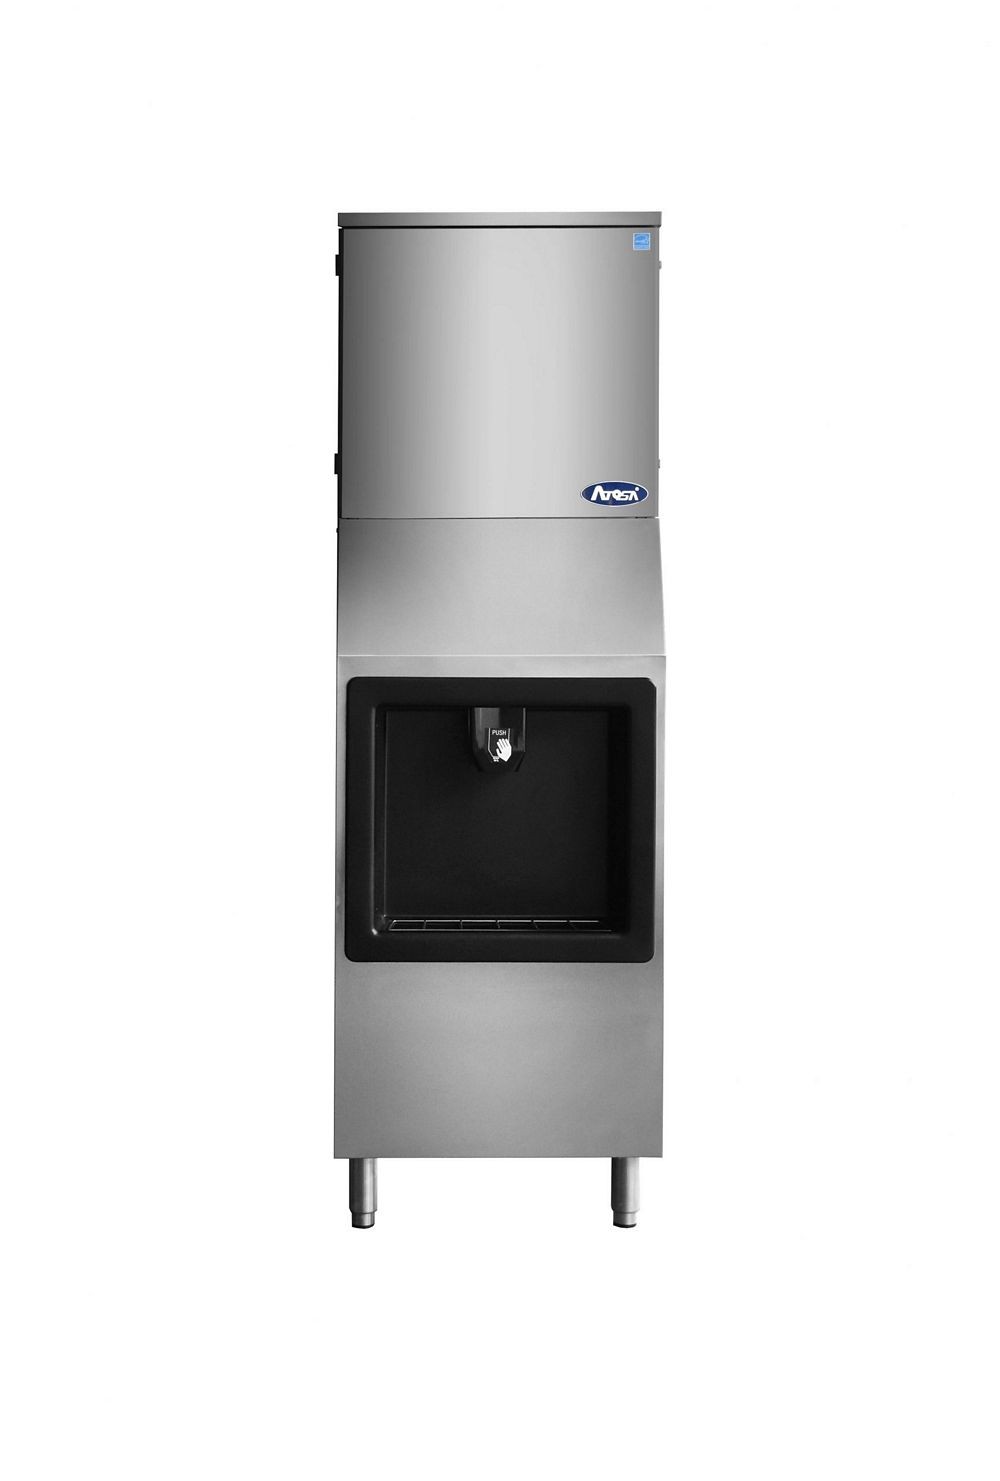 Atosa HD350-AP-161 Air Cooled Half Cube Hotel Ice Machine and Dispenser, 160 Lb Storage